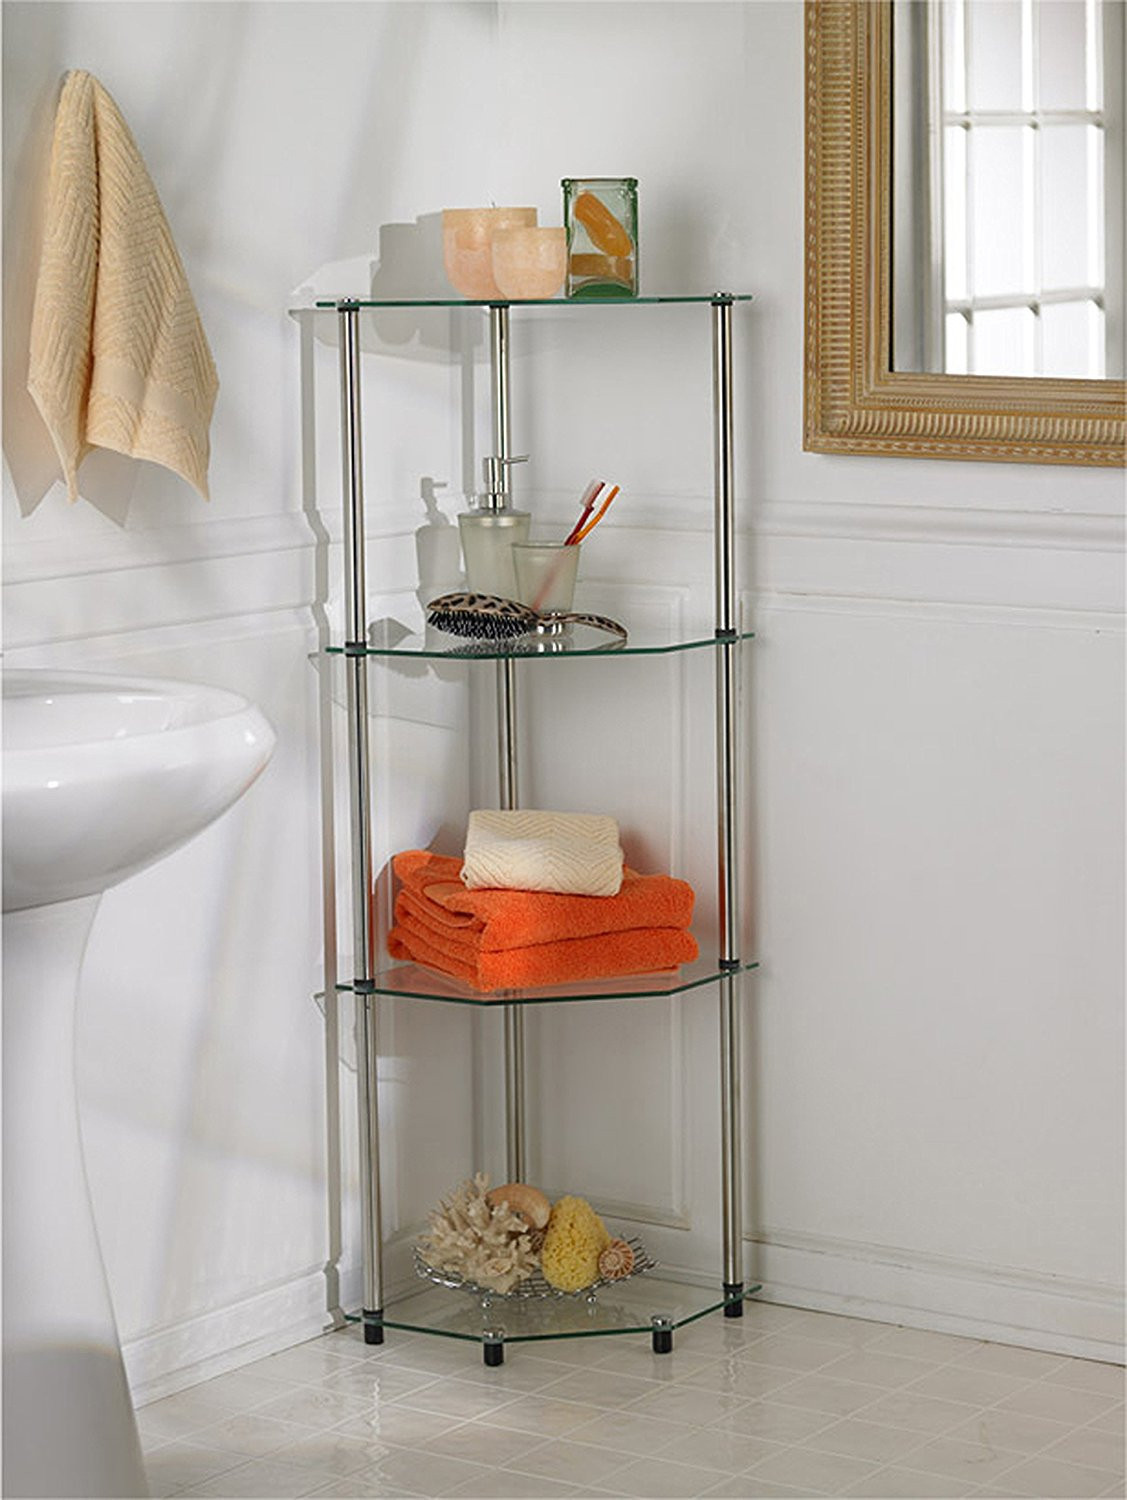 Bathroom Shower Corner Shelves
 Review of Glass based Bathroom Corner Shelves